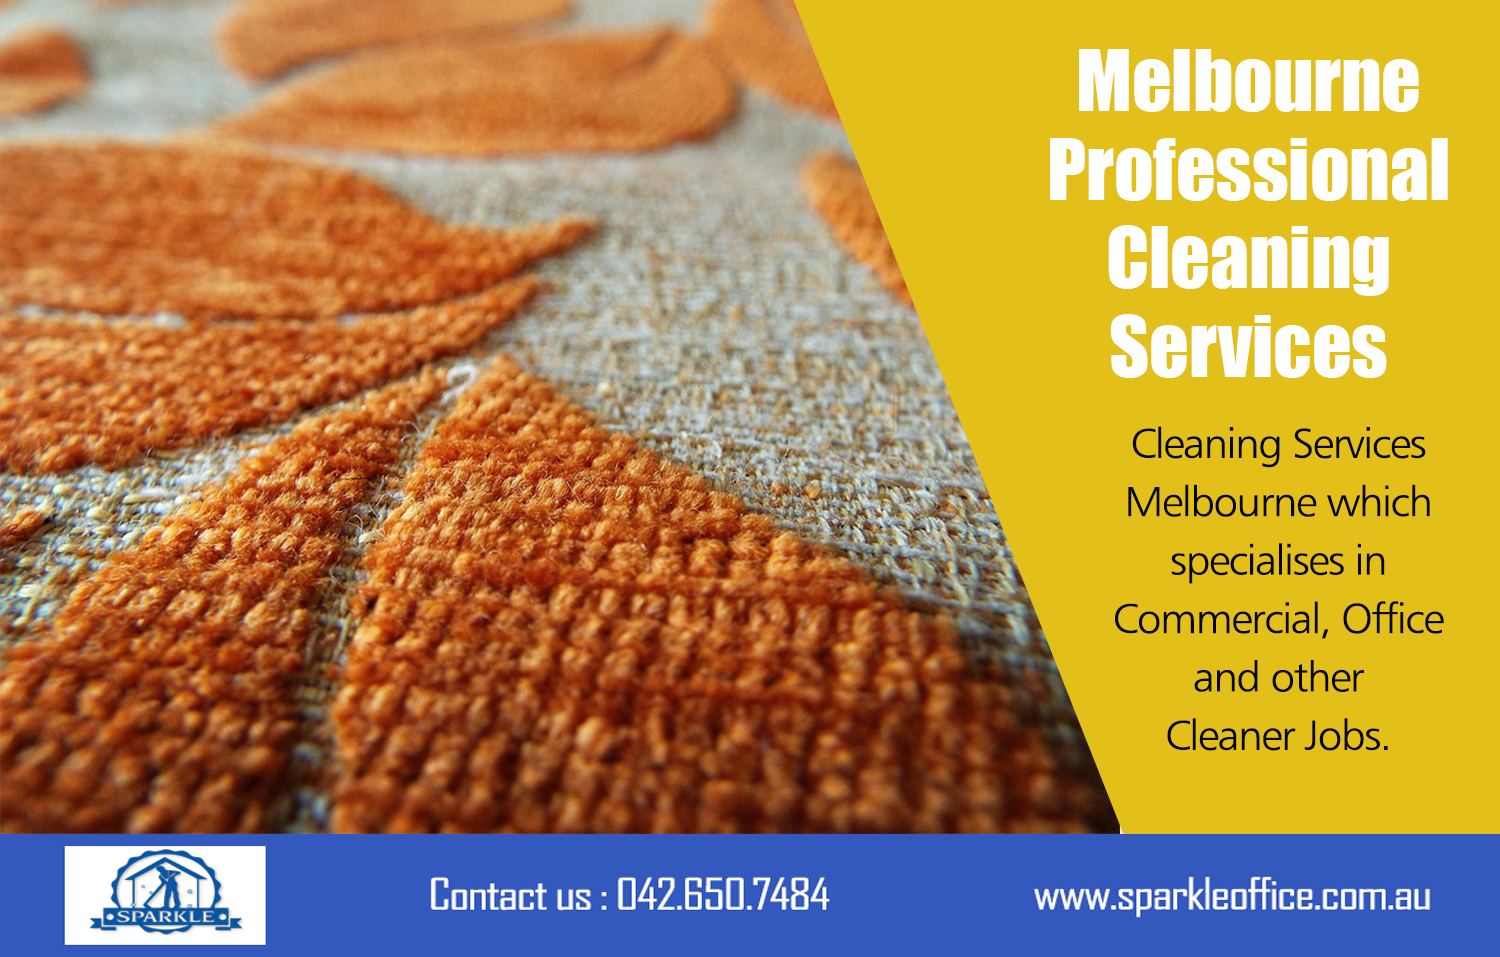 Melbourne Professional Cleaning Services| Call Us - 042 650 7484  | sparkleoffice.com.au